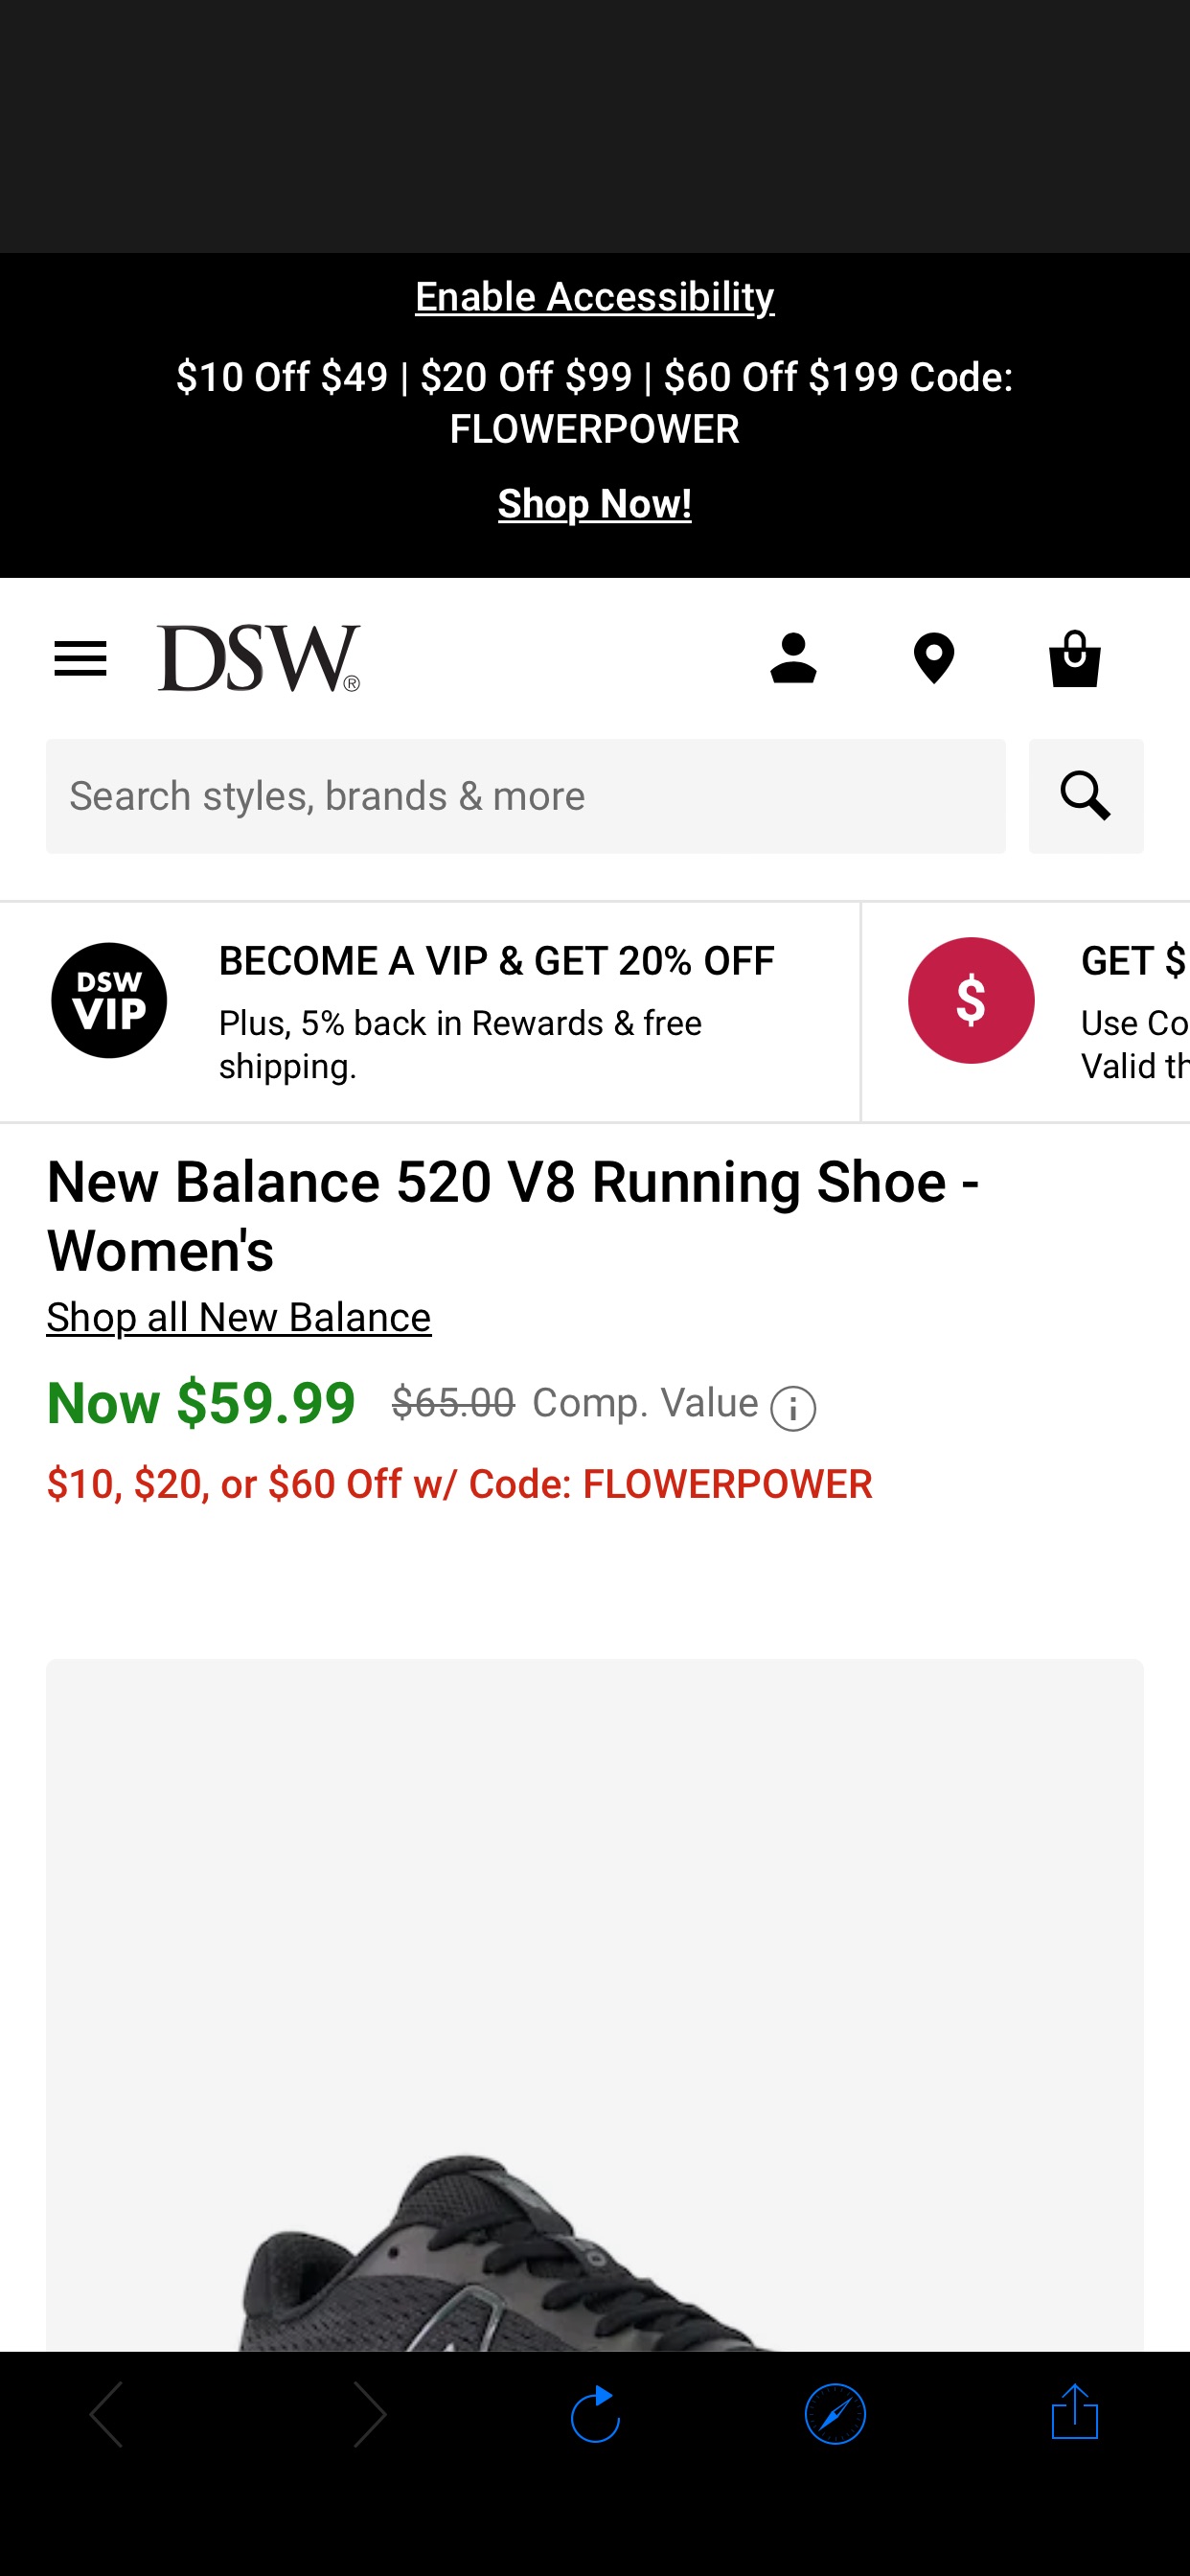 New Balance 520 V8 Running Shoe - Women's - Free Shipping | DSW